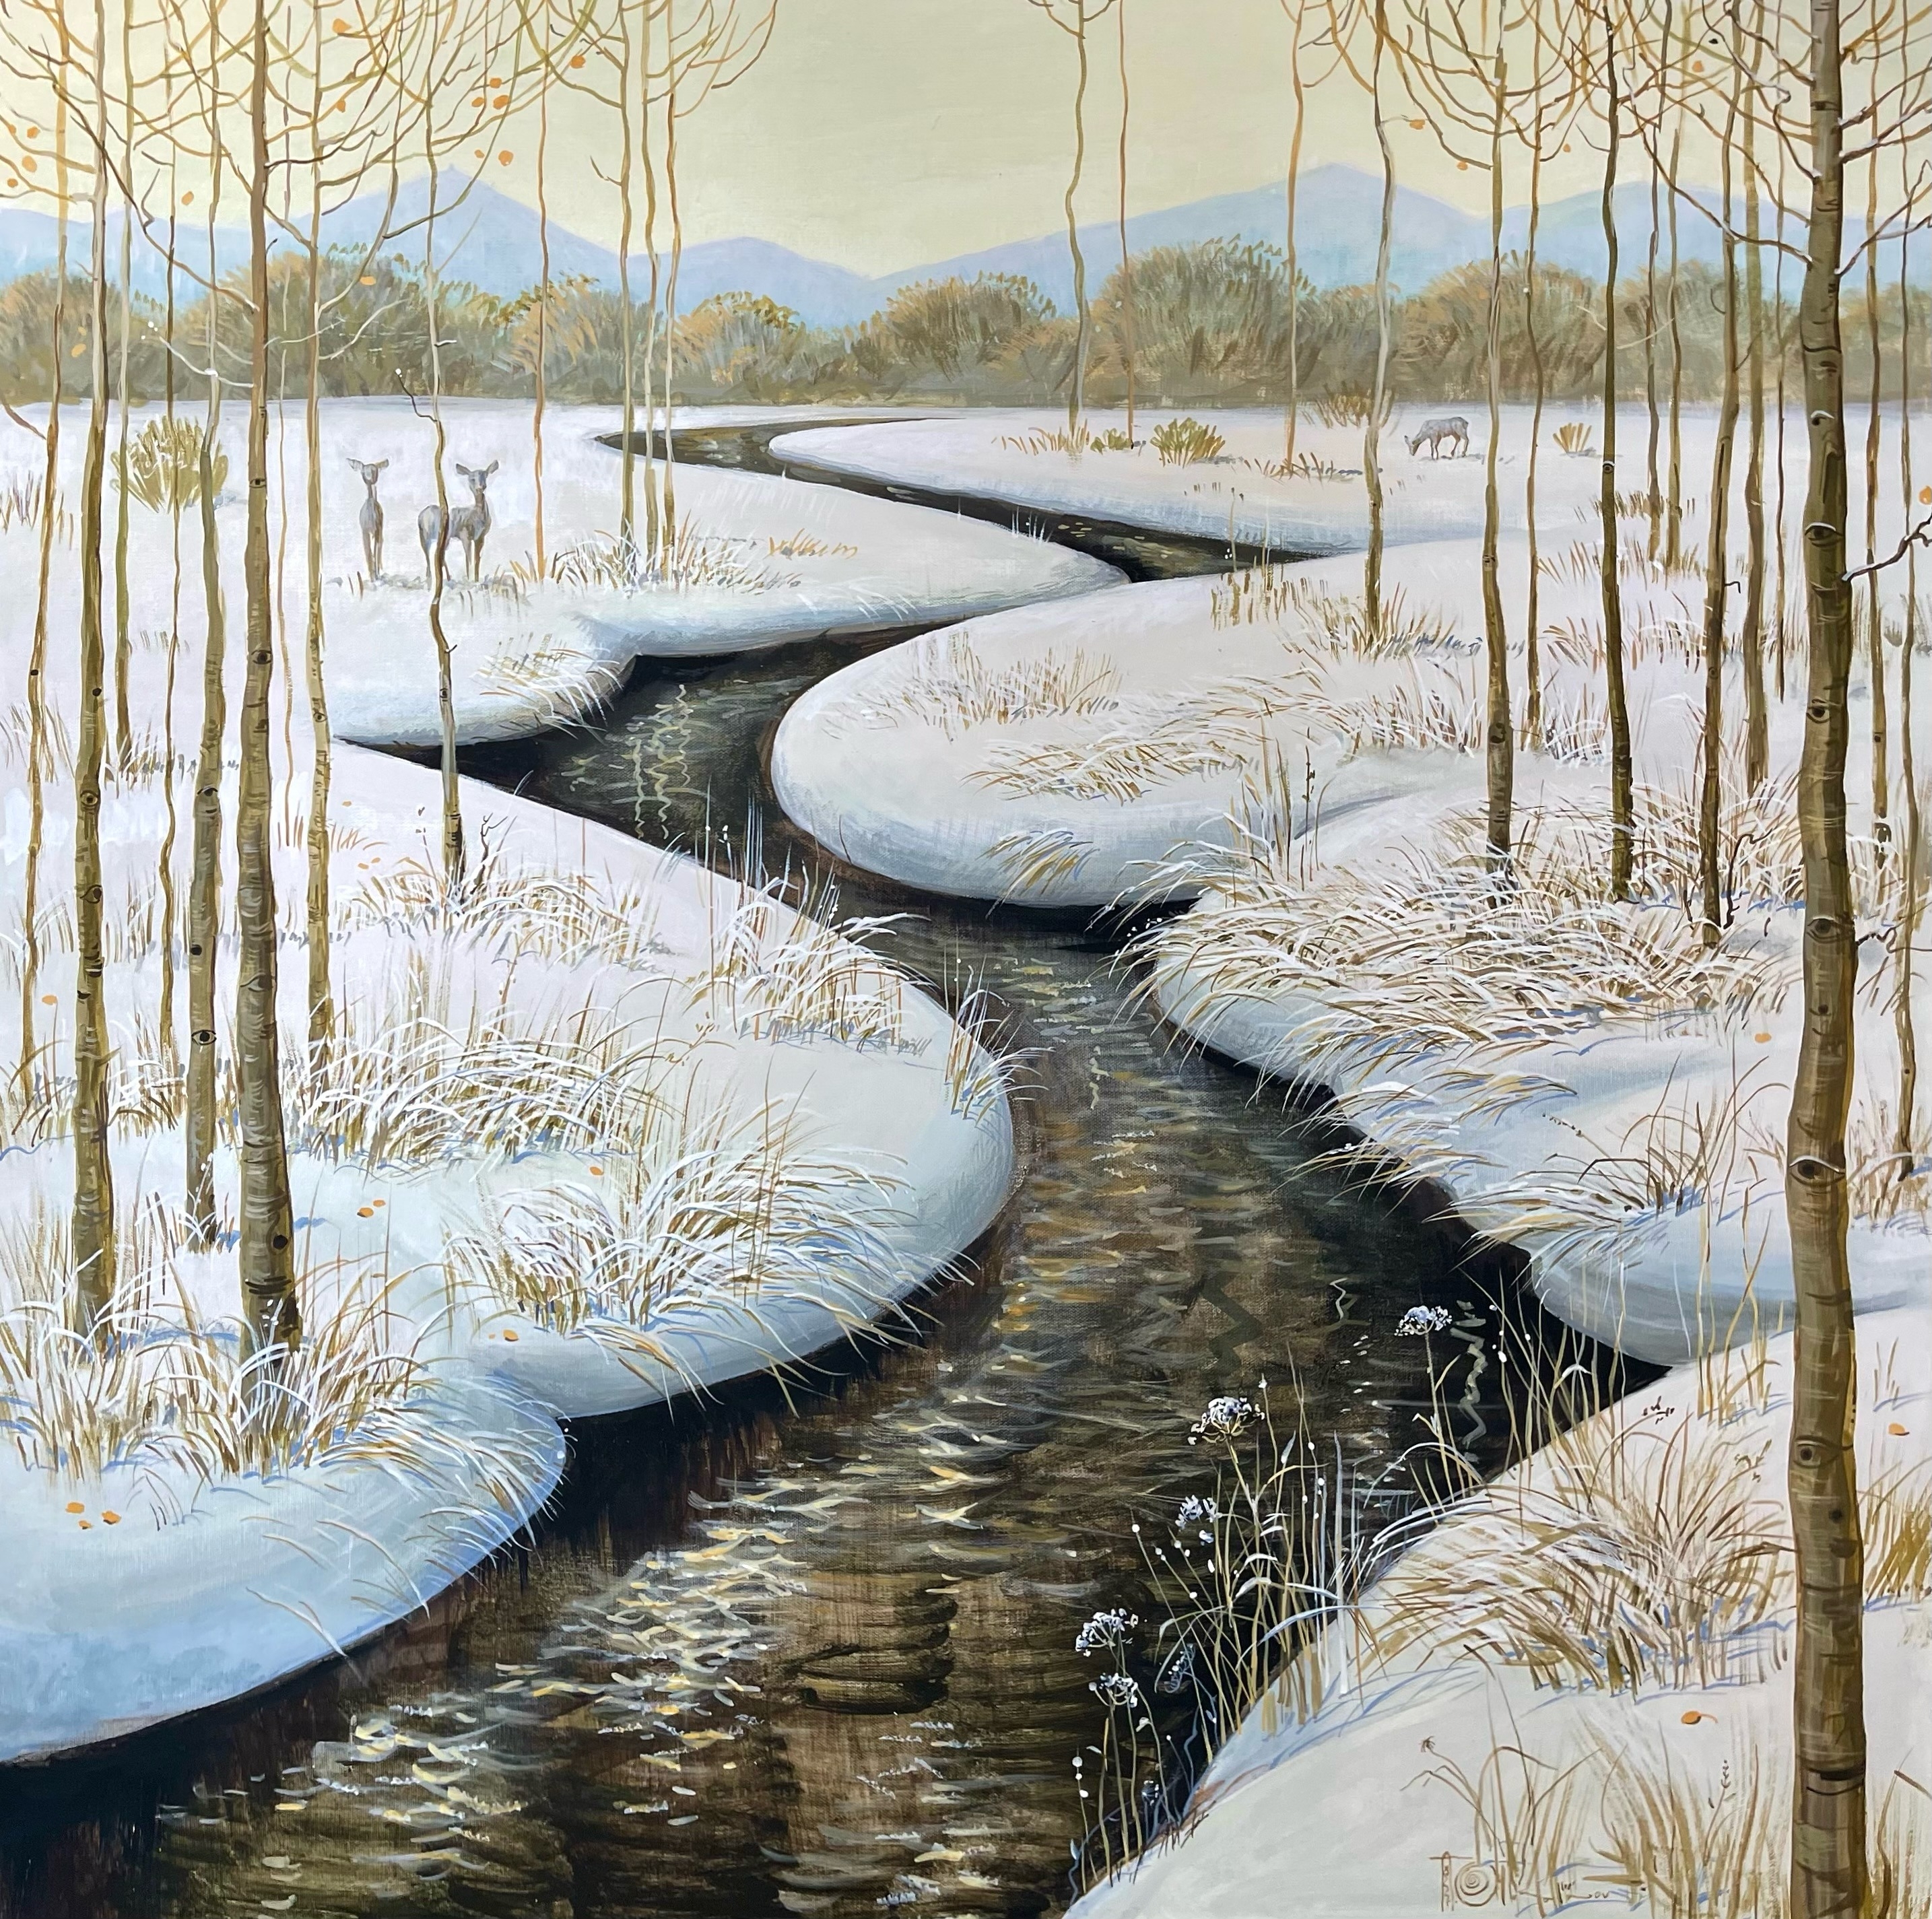 
Winter Creek by Olga and Aleksey Ivanov